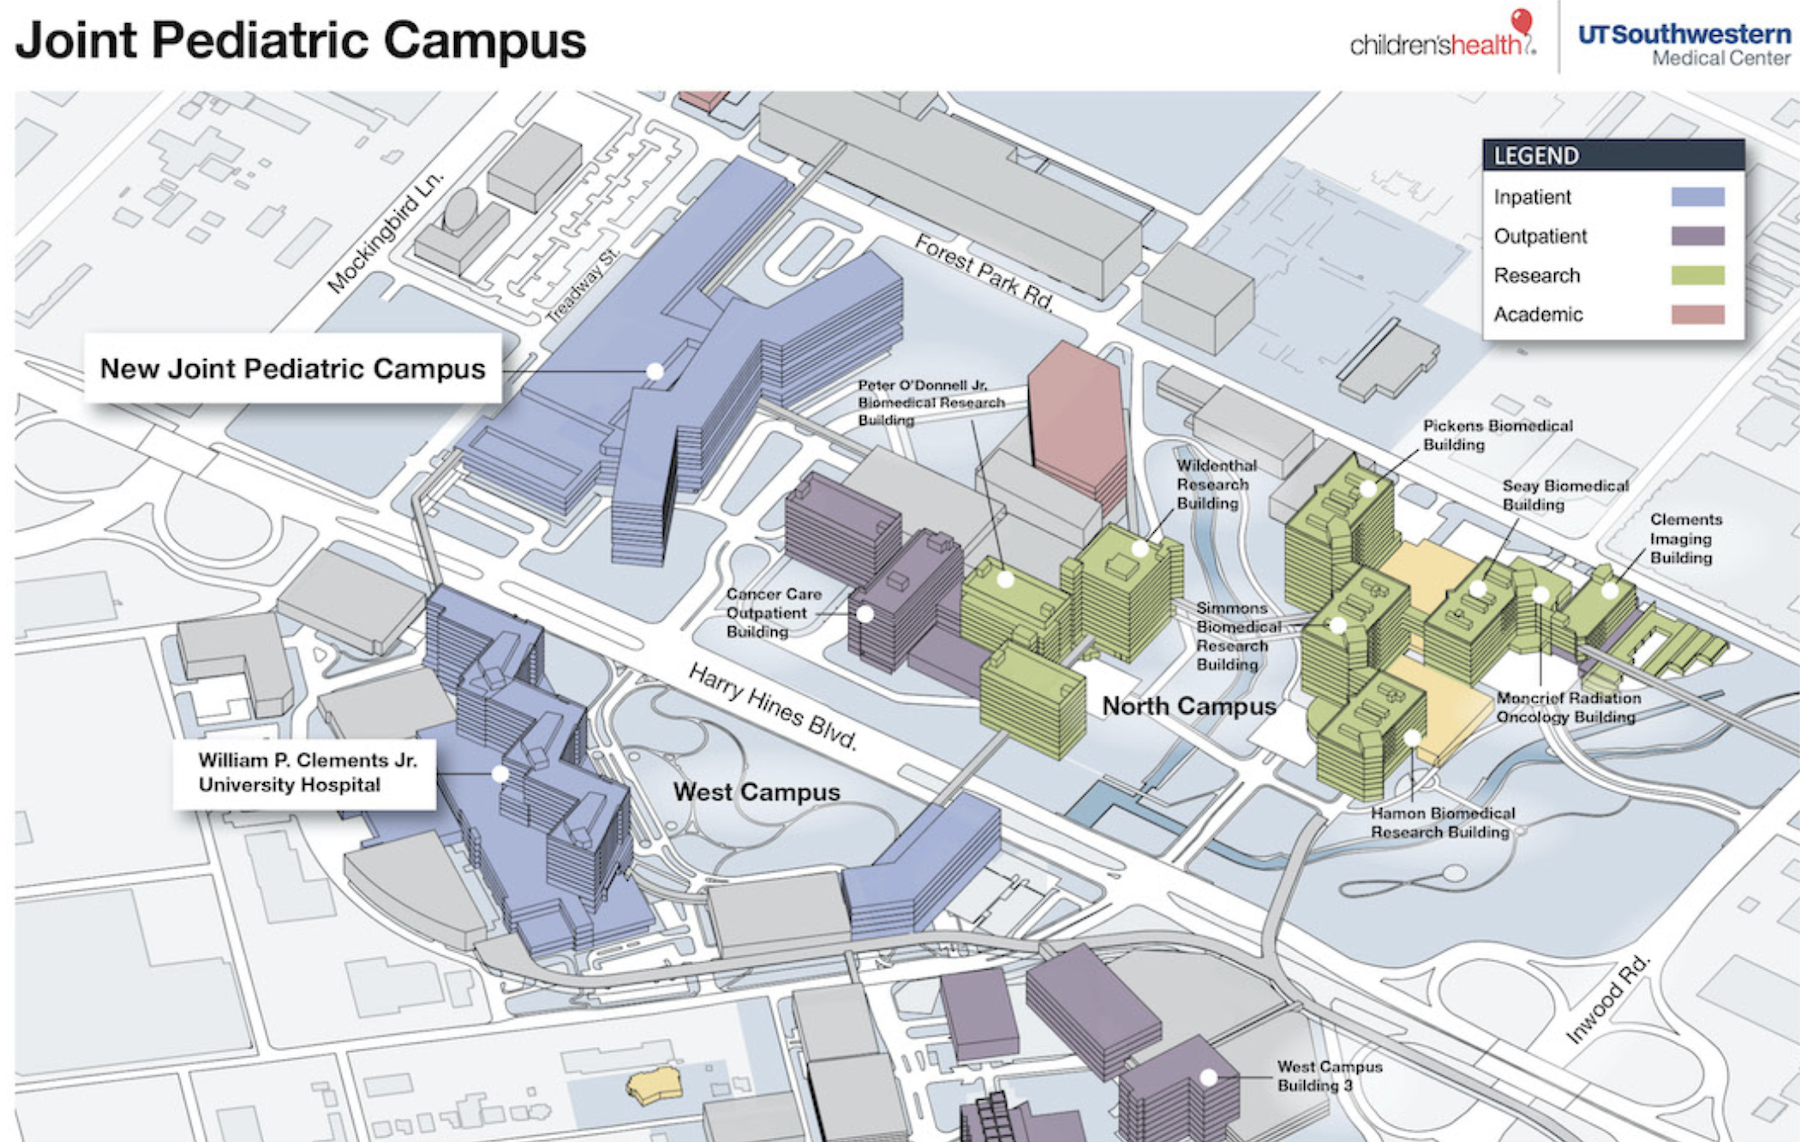 Dallas campus will include several research buildings